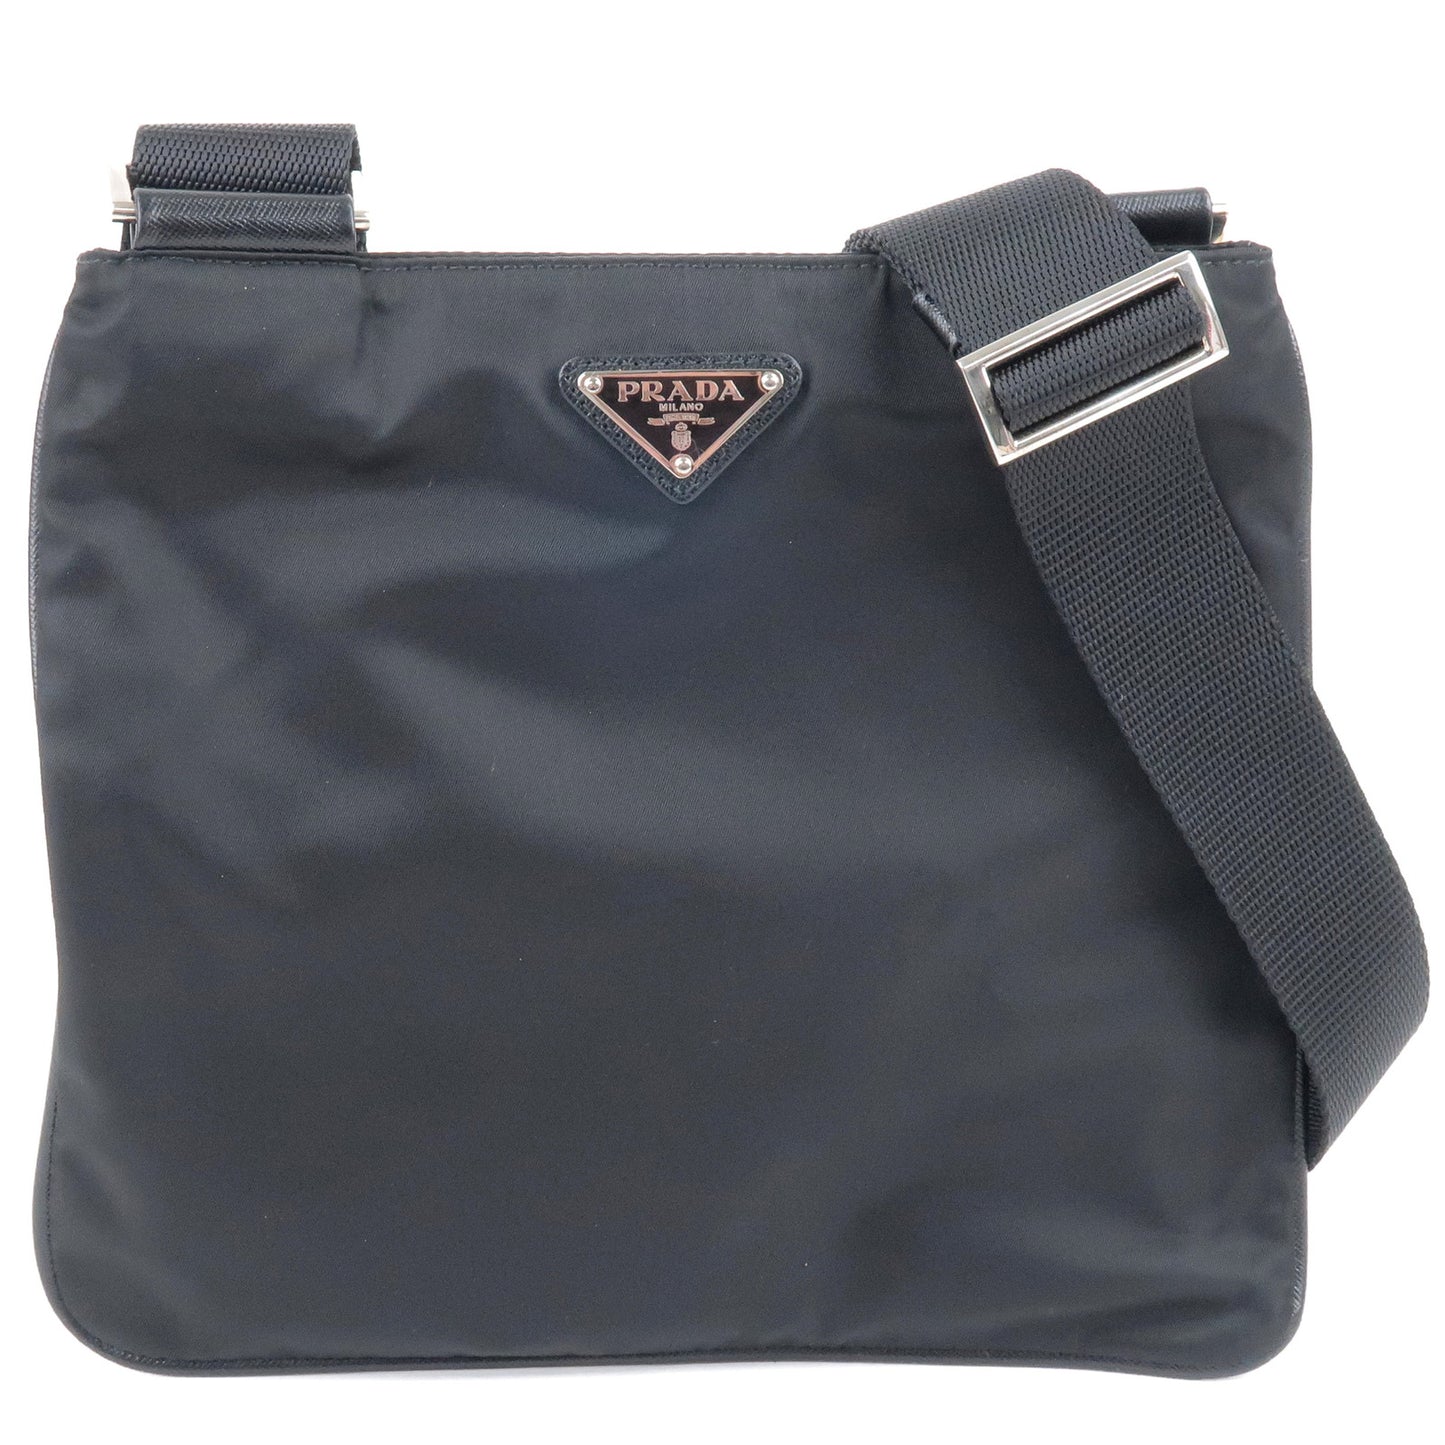 PRADA-Logo-Nylon-Leather-Shoulder-Bag-Purse-NERO-Black-VA0779